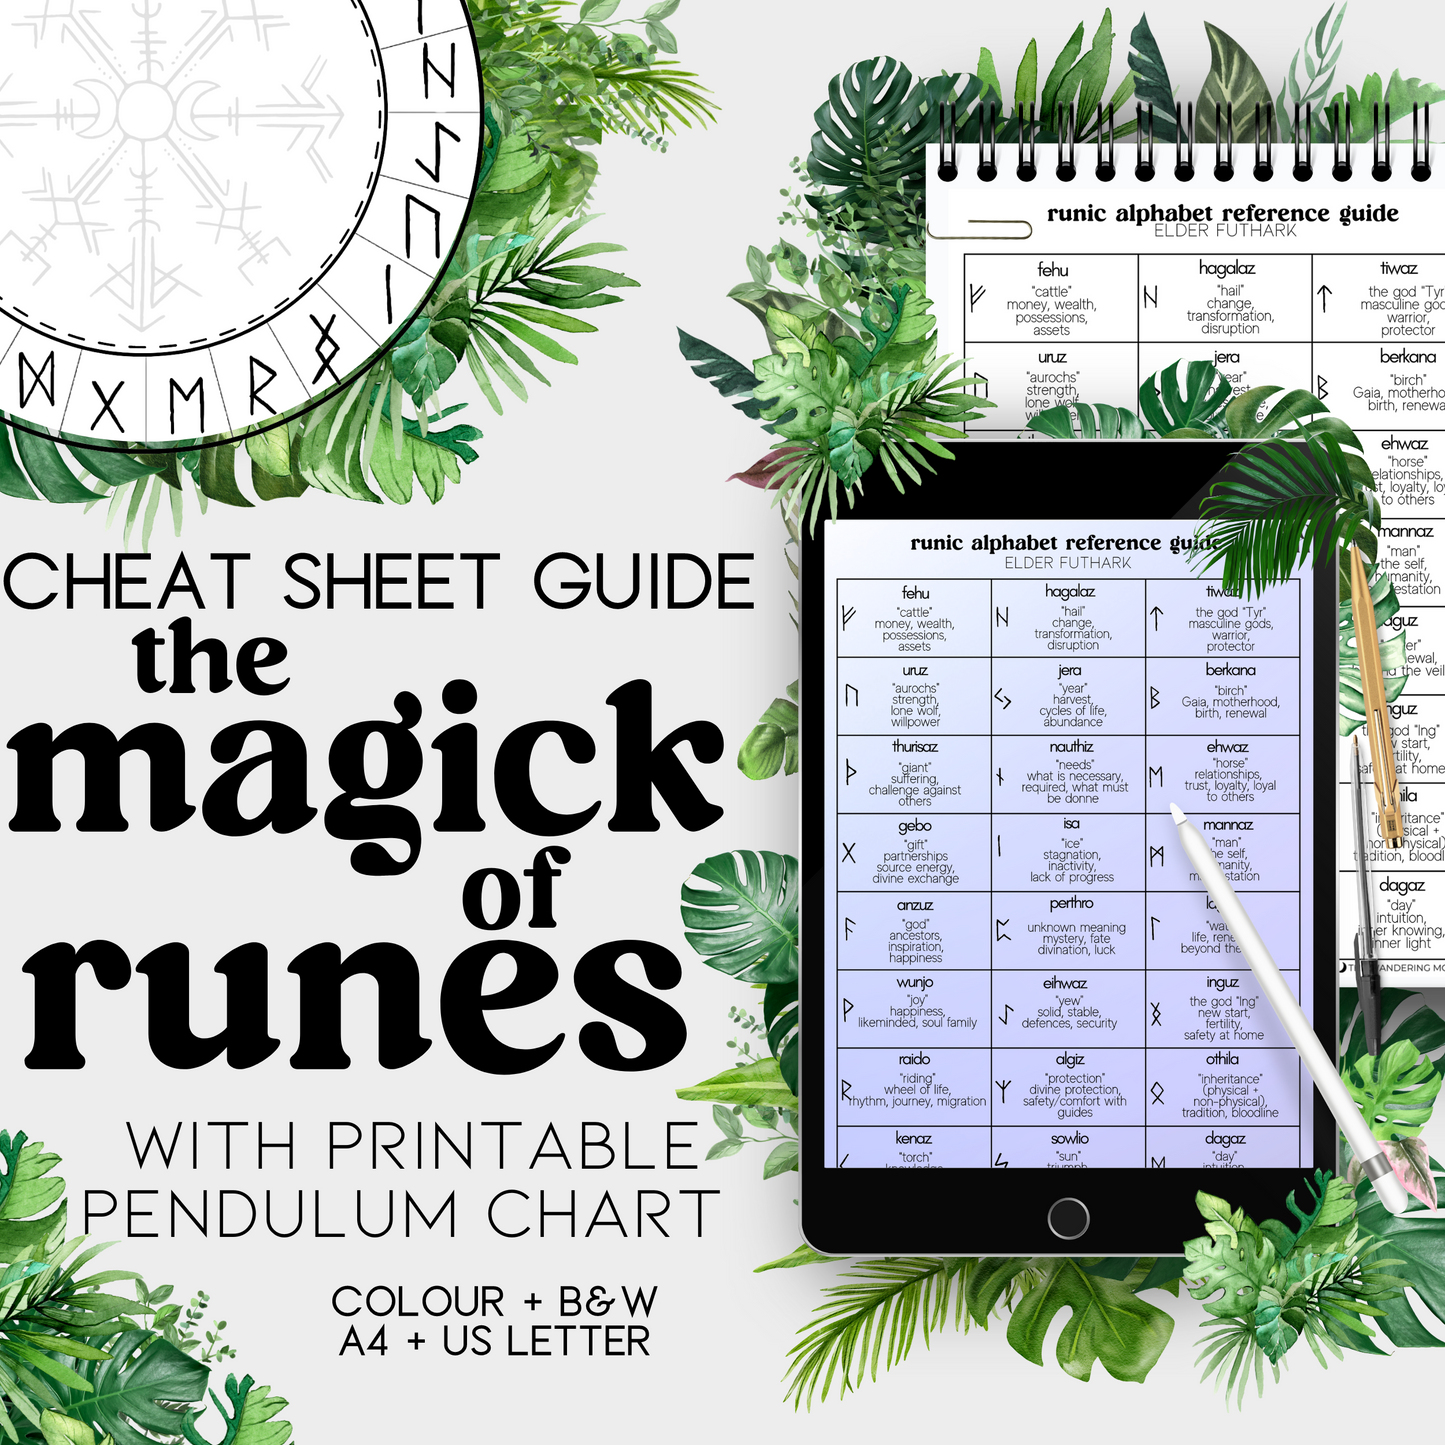 elder futhark runes: cheat sheet guide